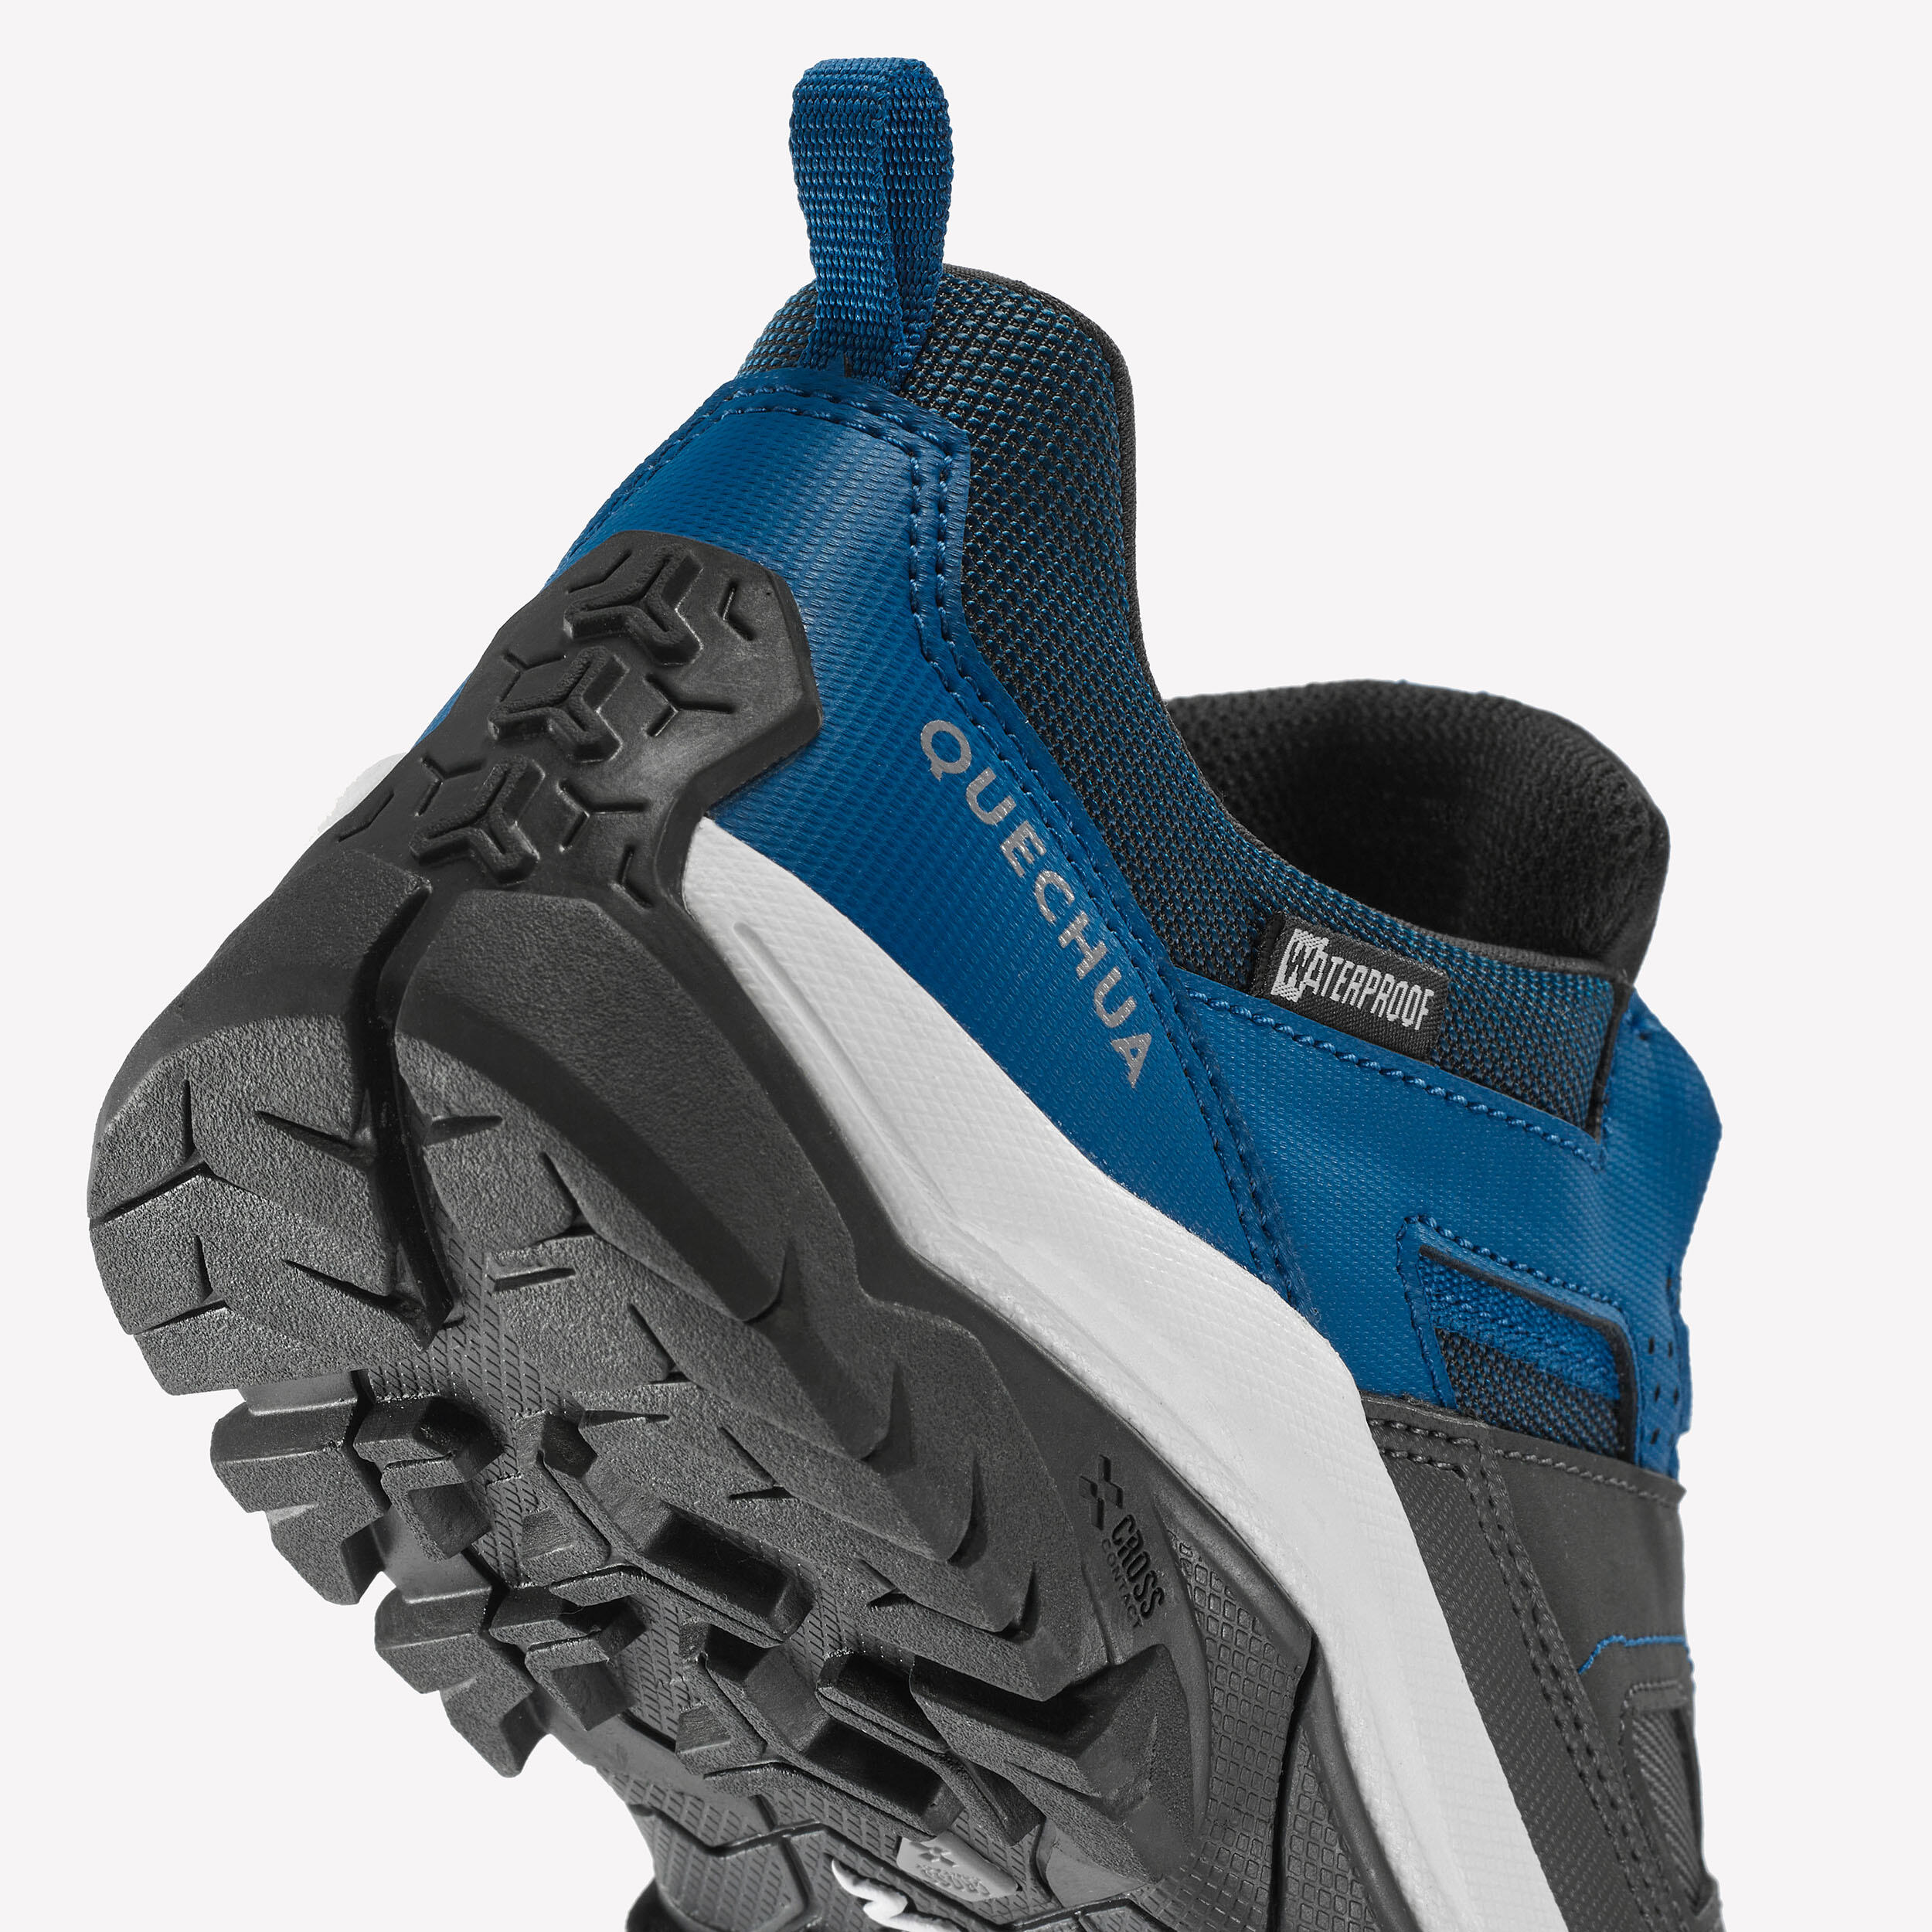 Kids’ Waterproof Lace-up Hiking Shoes - CROSSROCK UK size 2.5 - 5 - Blue 7/10